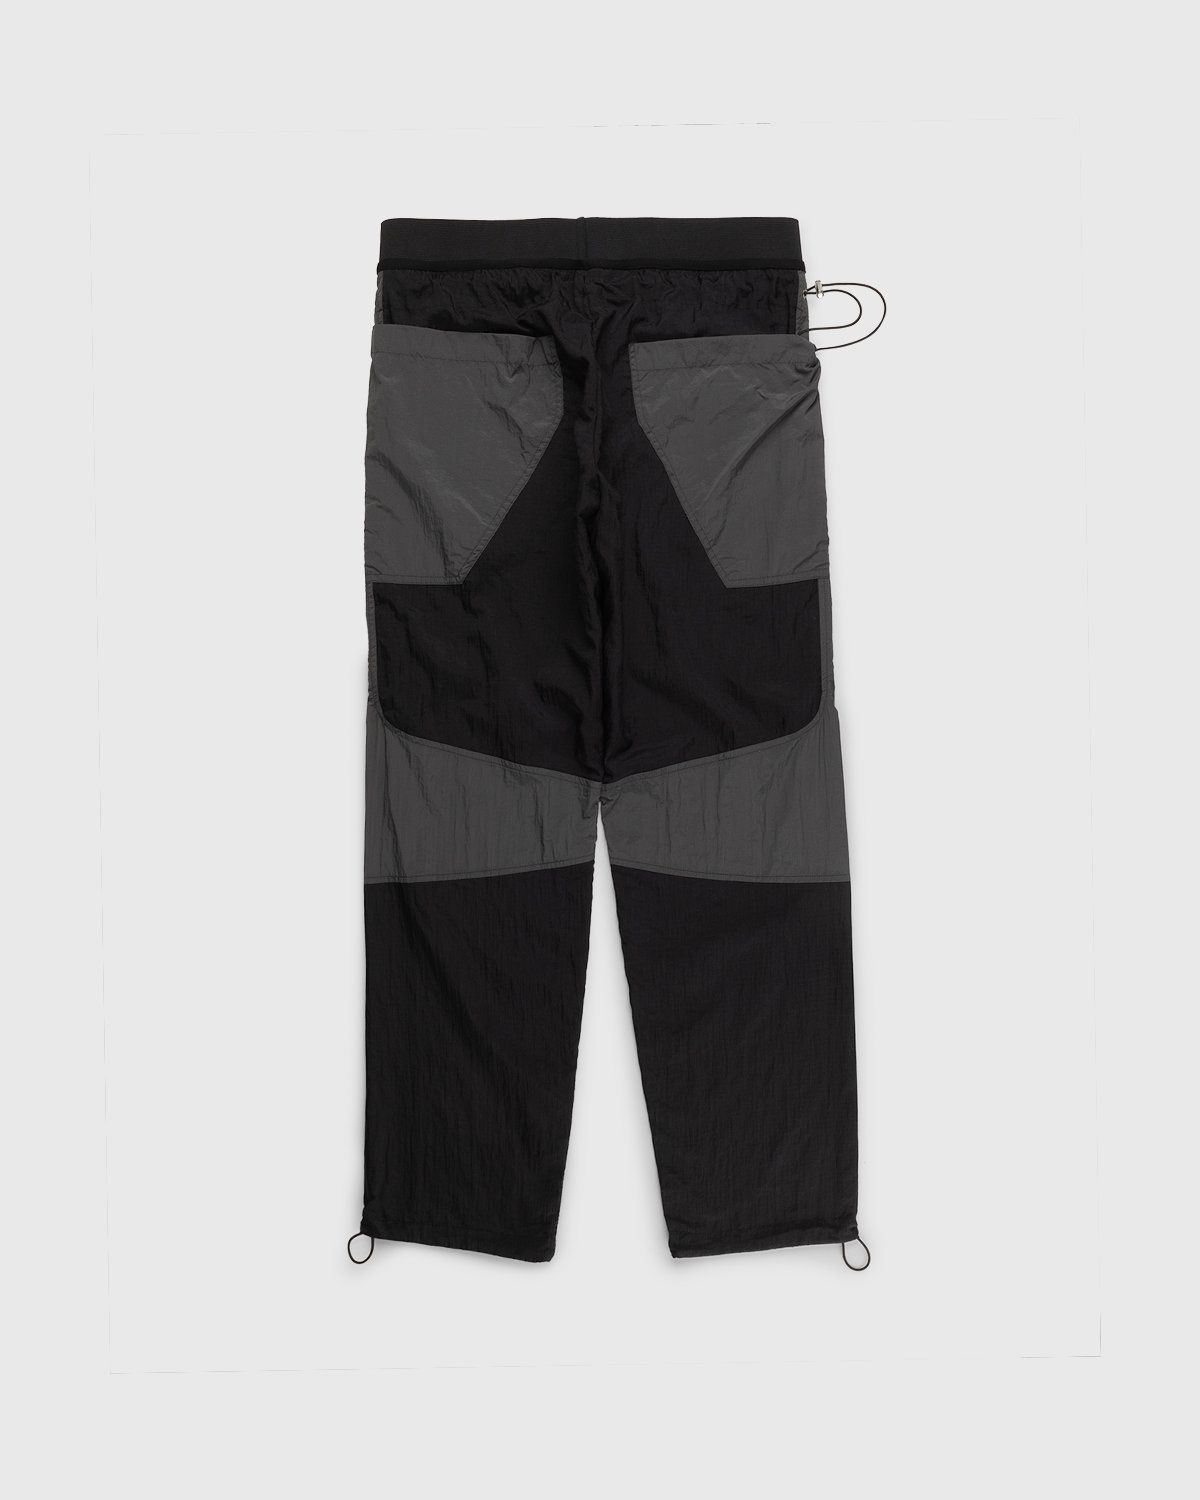 Arnar Mar Jonsson – Oroi Paneled Trouser Black/Charcoal - Work Pants - Brown - Image 1